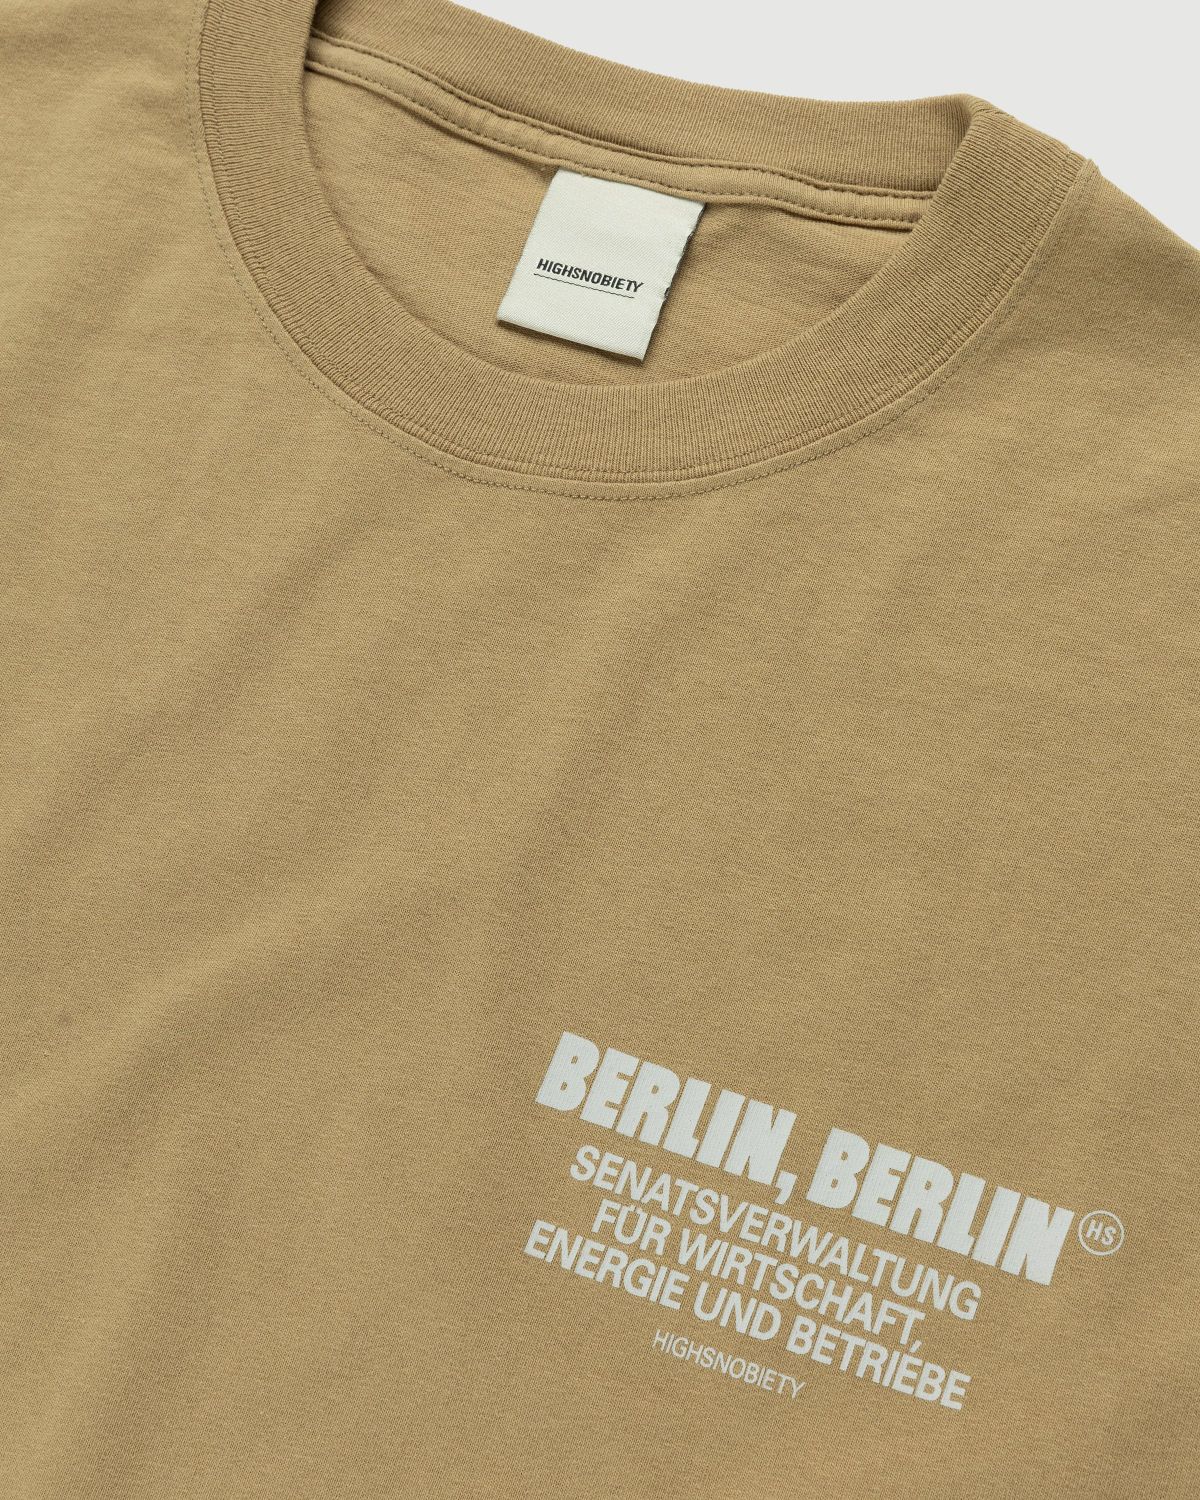 Highsnobiety – BERLIN, BERLIN 3 T-Shirt Military Green - T-Shirts - Beige - Image 4